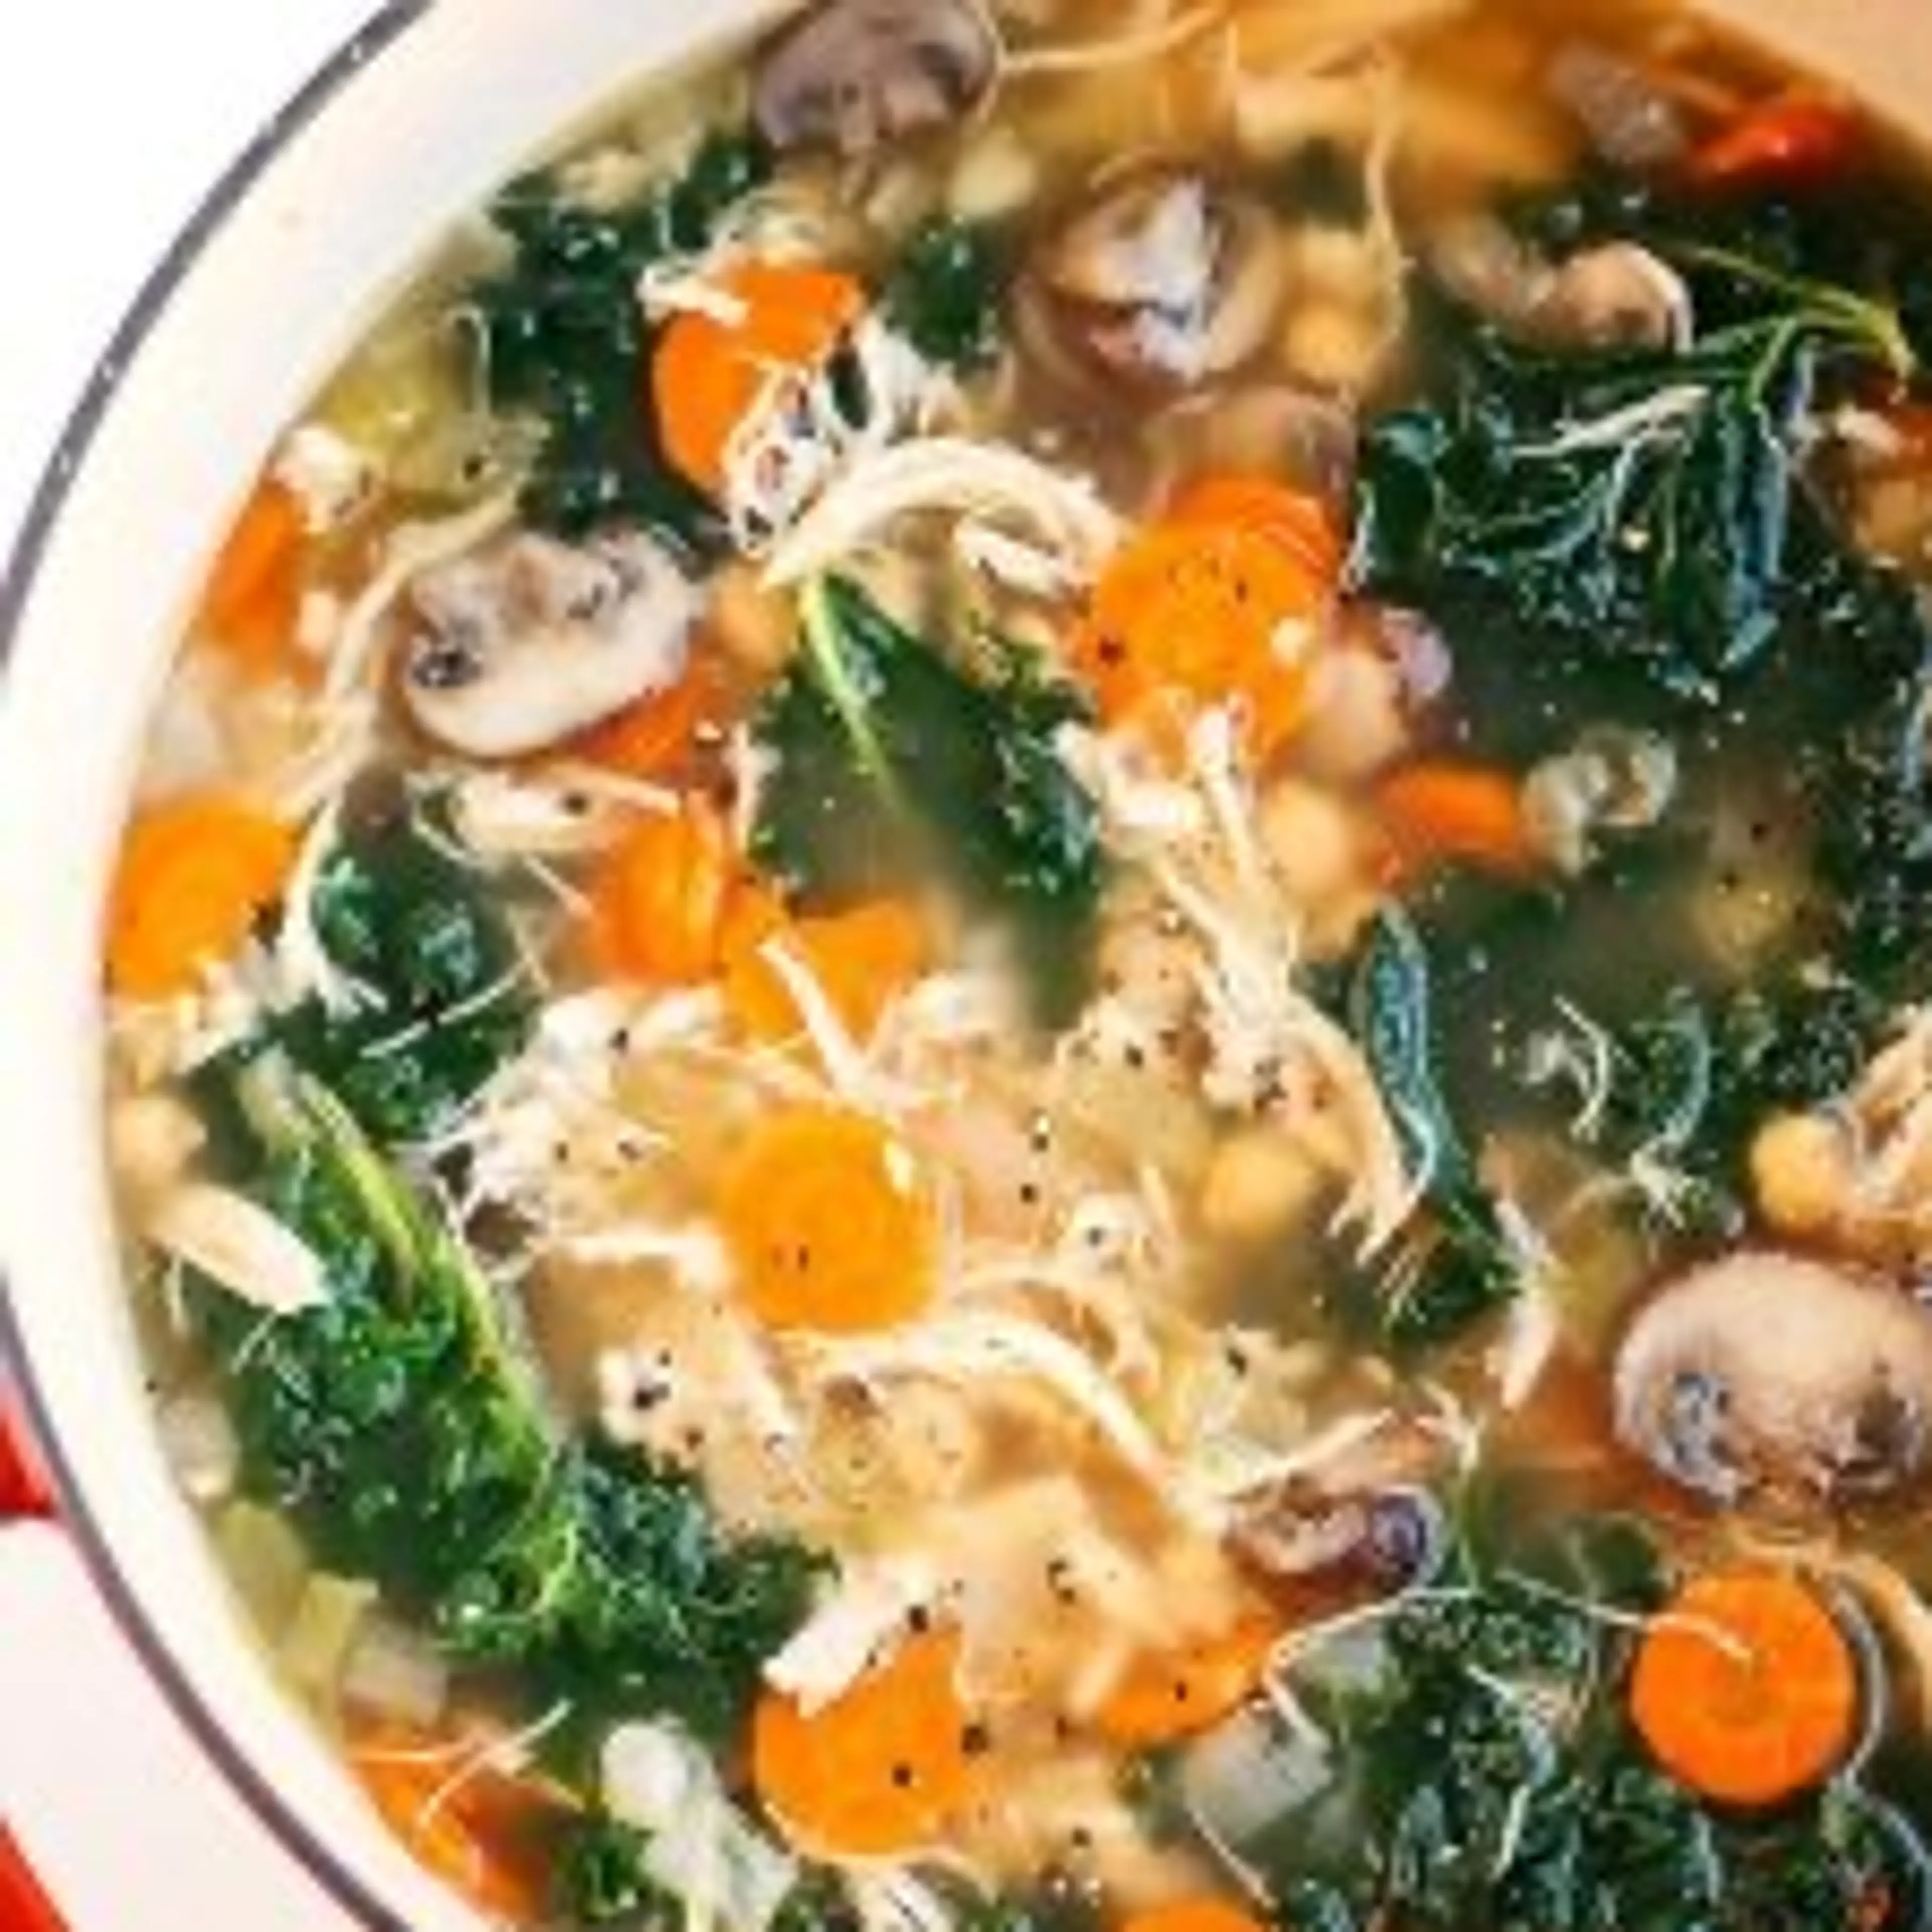 Detox Immune-Boosting Soup